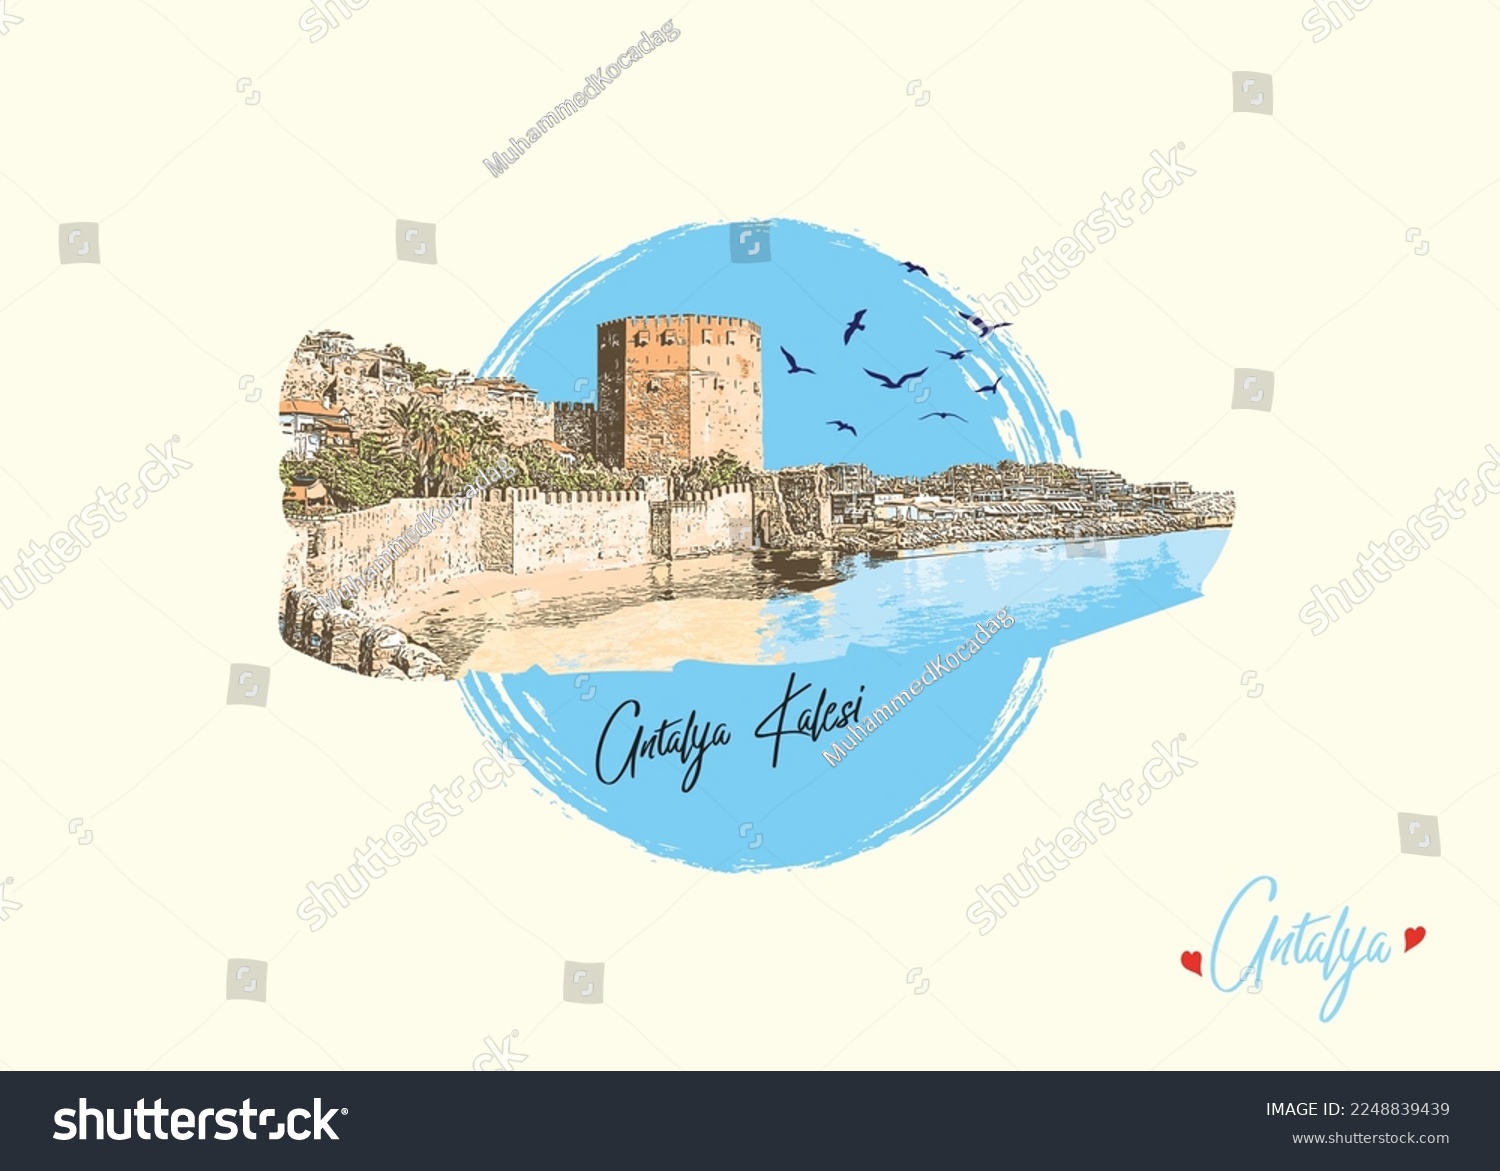 SVG of Turkish resort city Alanya with a fortress Alanya Kalesi svg